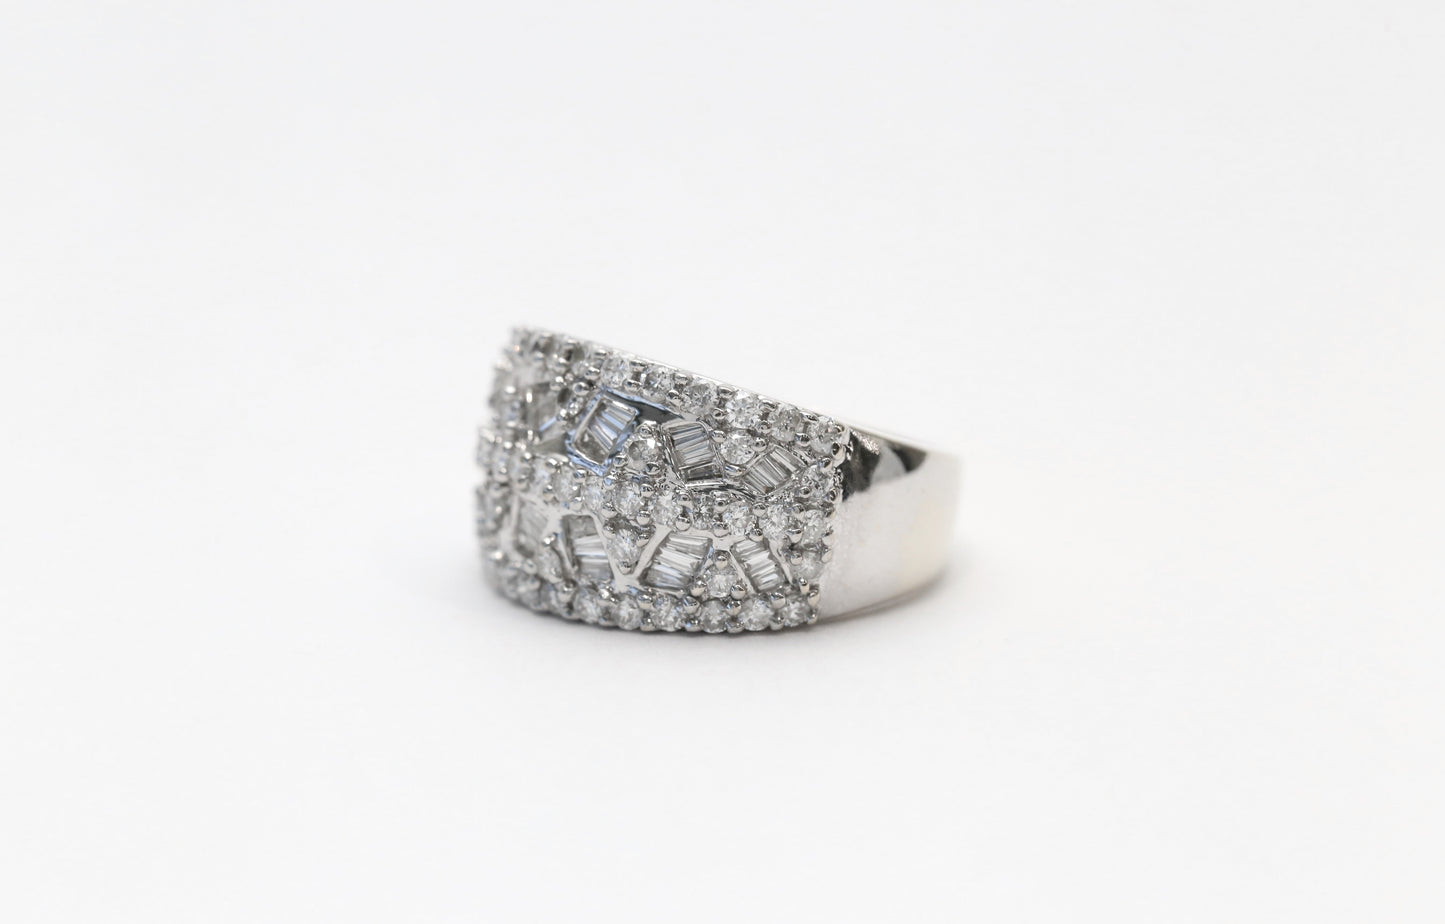 18k White Gold Diamond Ring, Size 8 - 7.7g